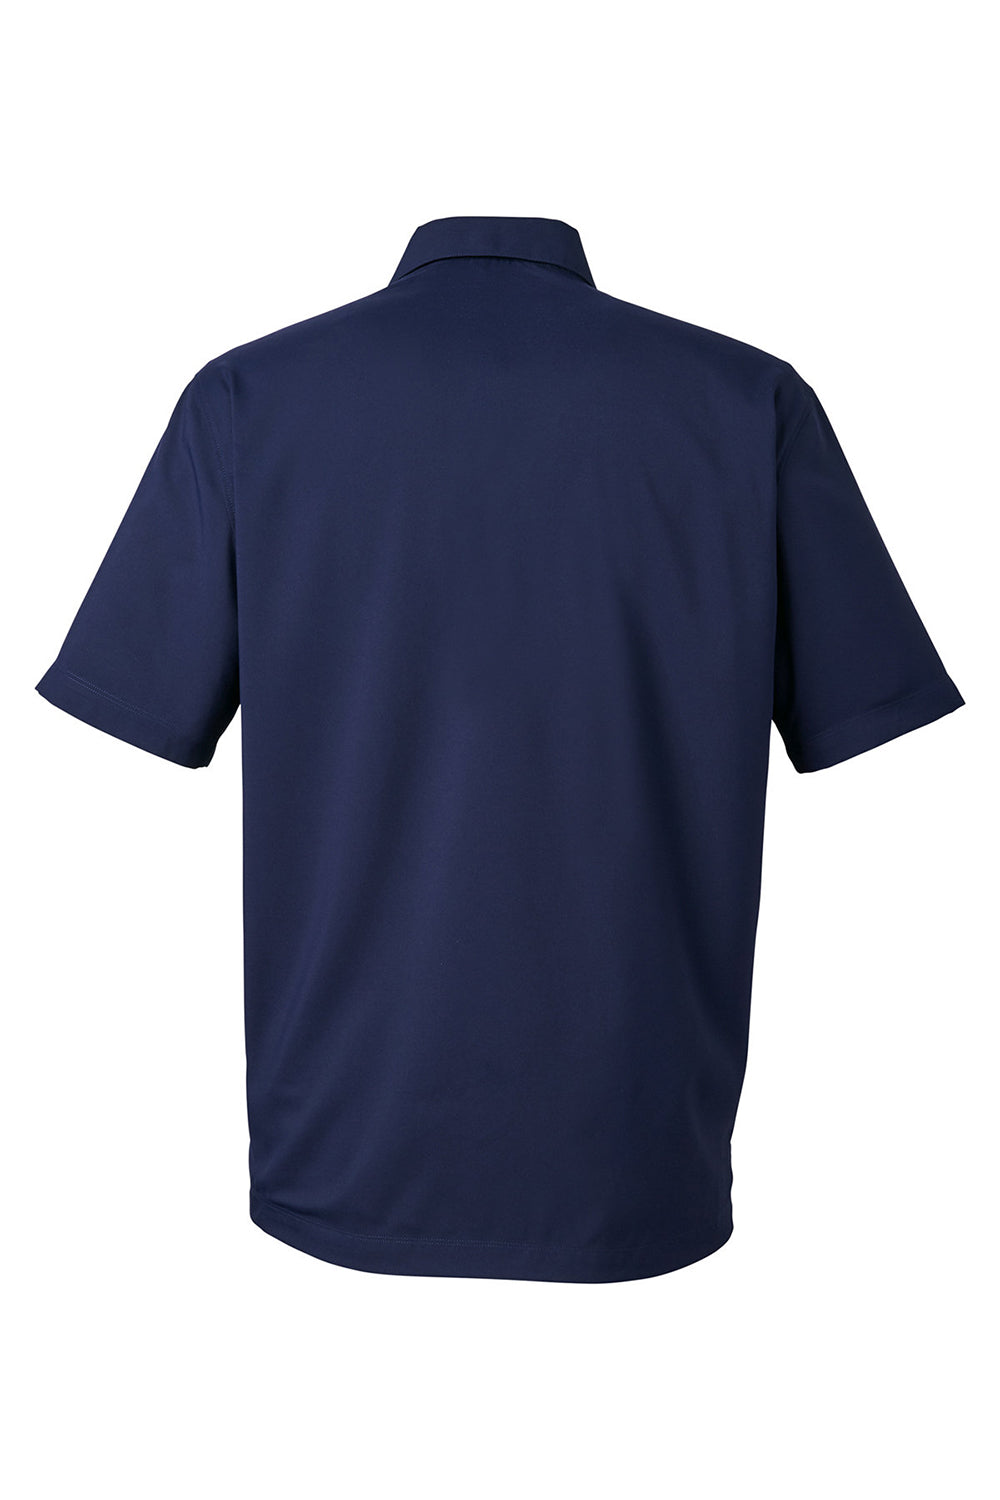 Under Armour 1351360 Mens Motivate Moisture Wicking Short Sleeve Button Down Shirt w/ Pocket Midnight Navy Blue Flat Back